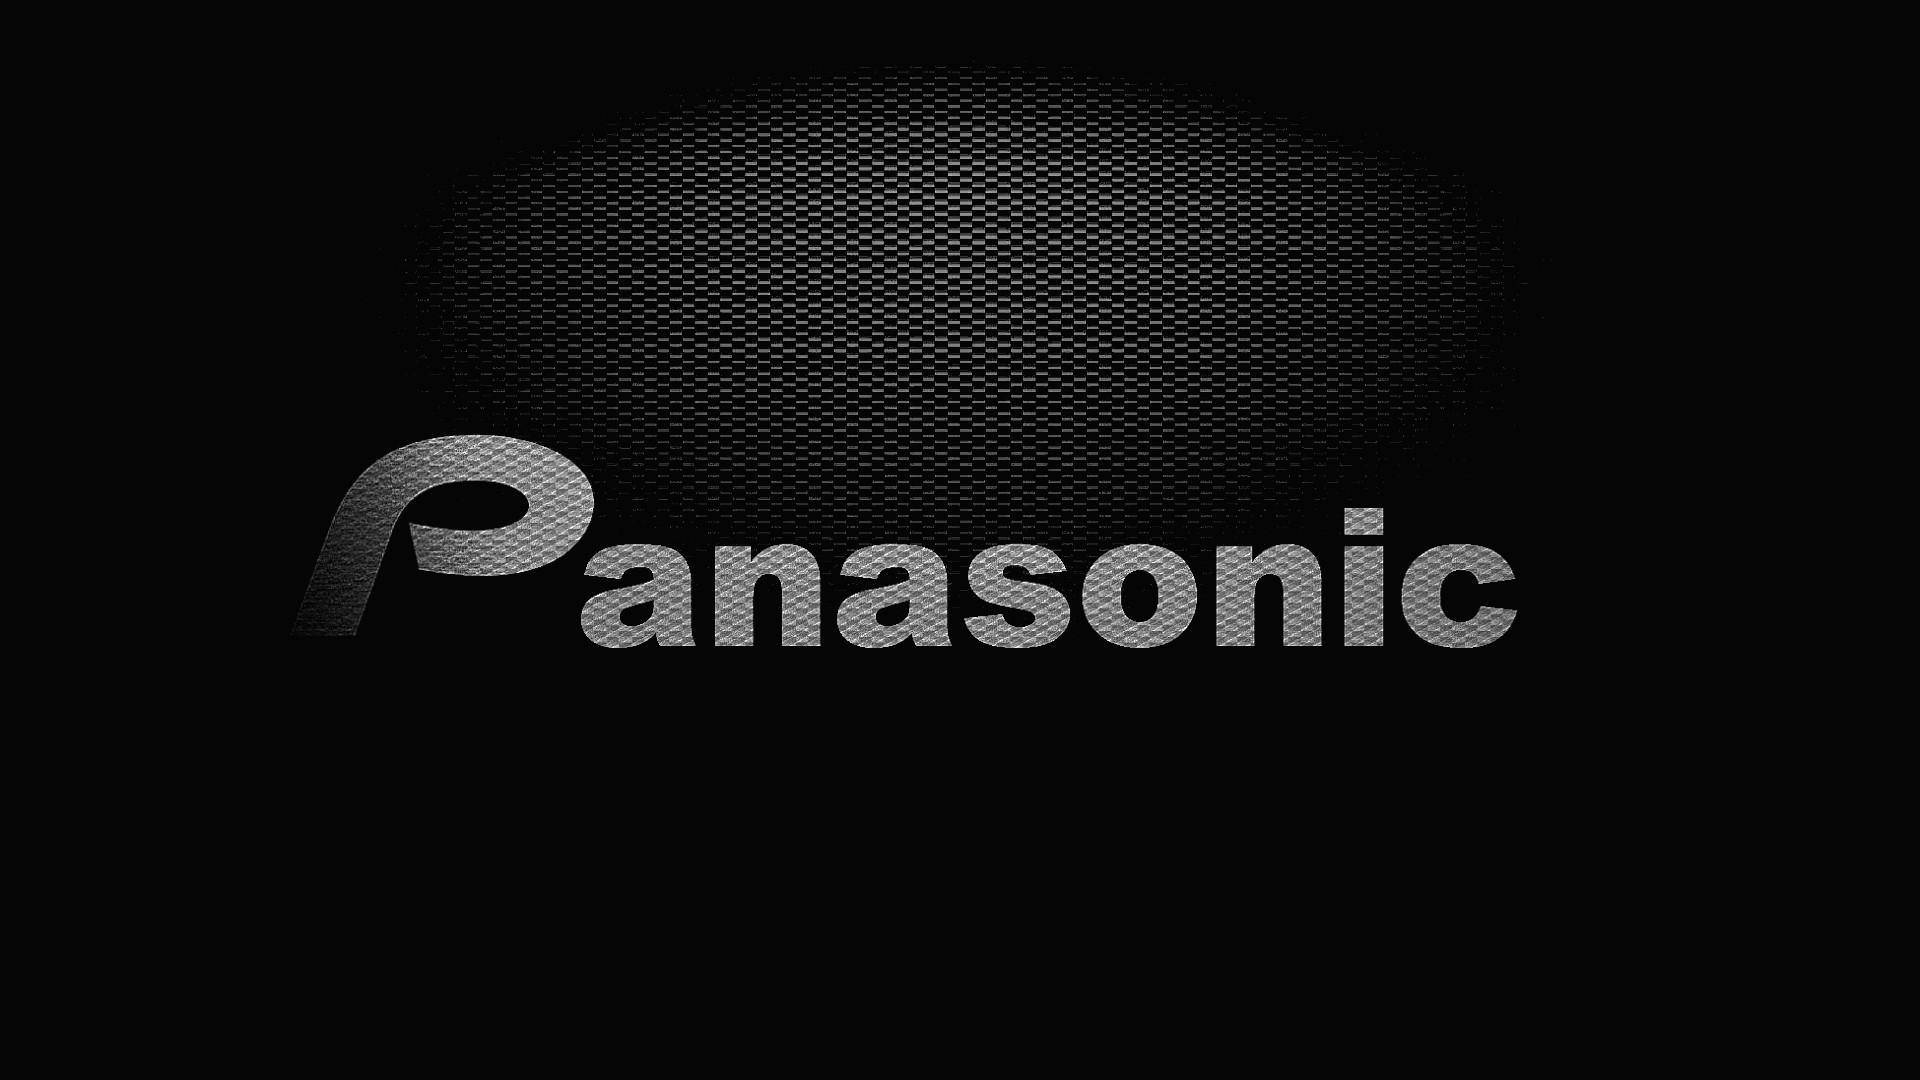 Grigio Panasonic In Nero Sfondo